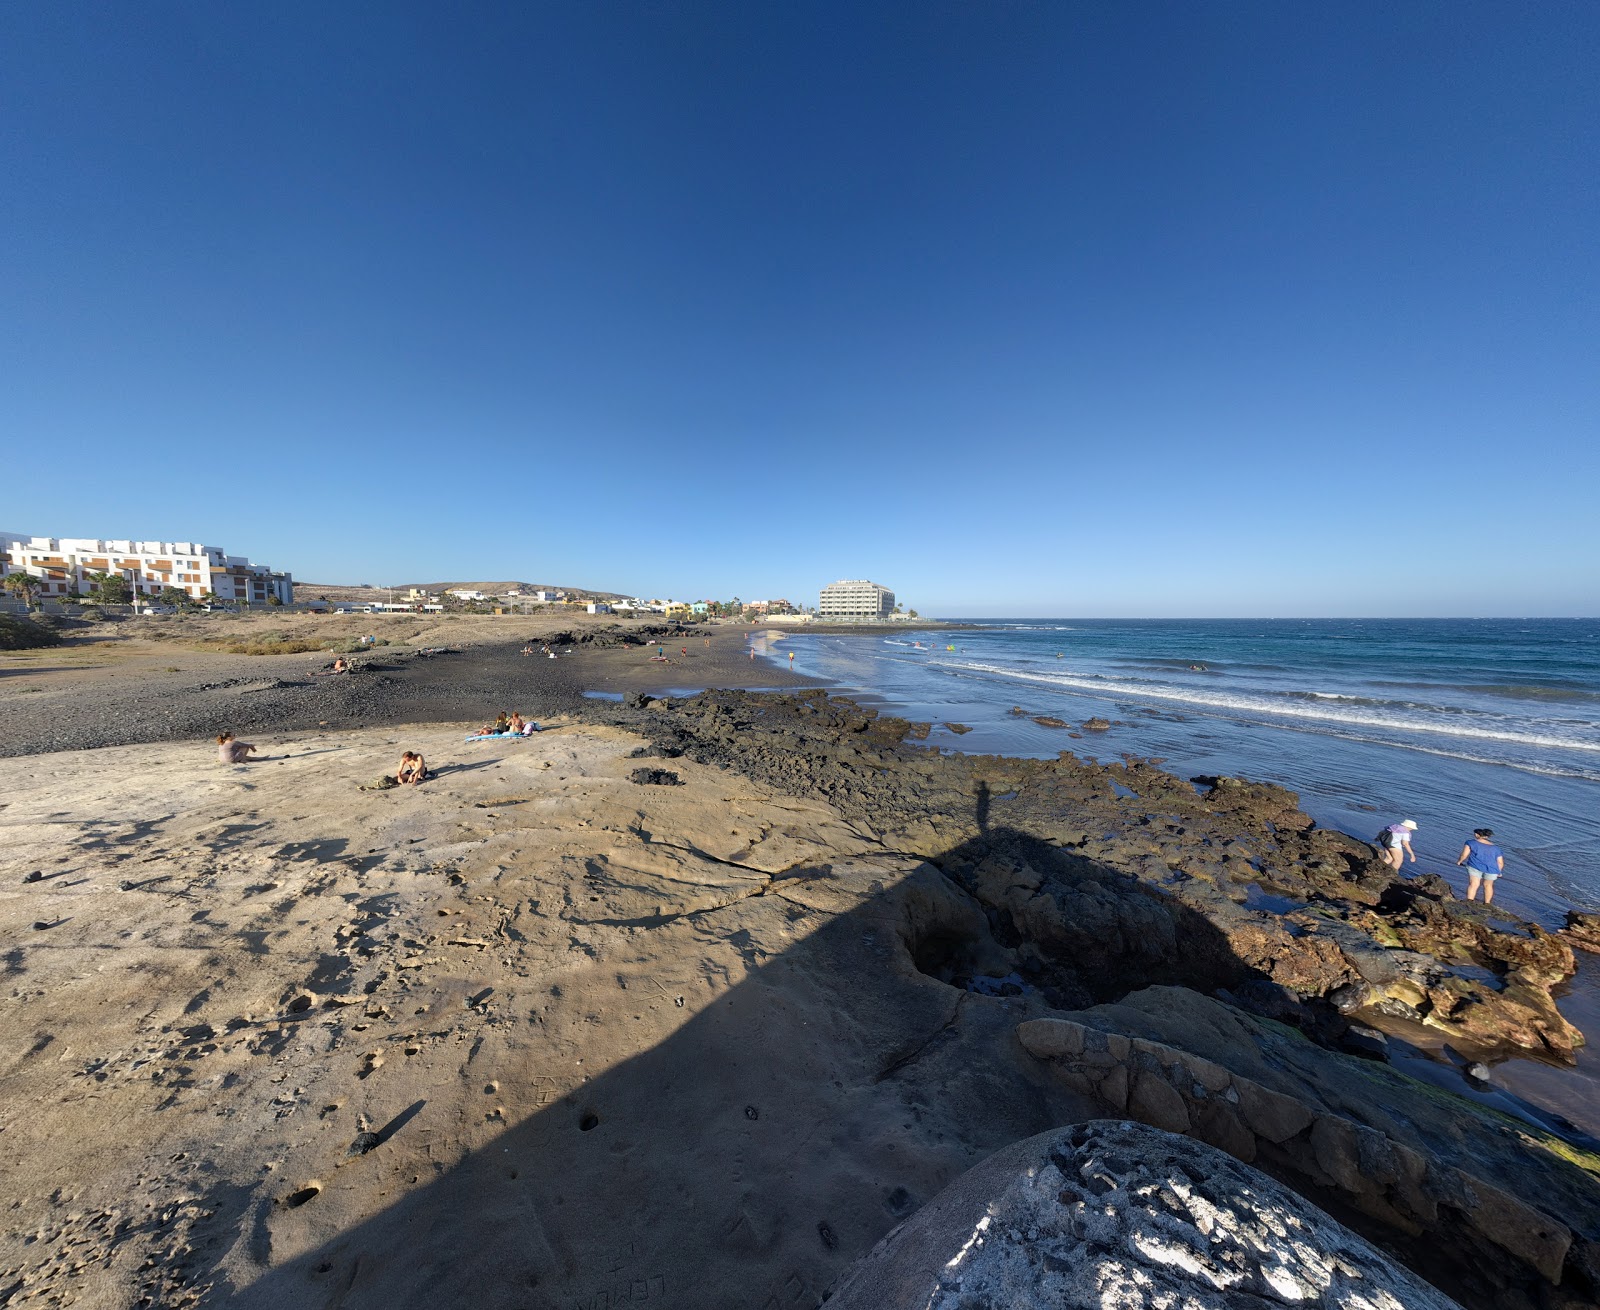 Photo of Playa El Salado with gray sand surface